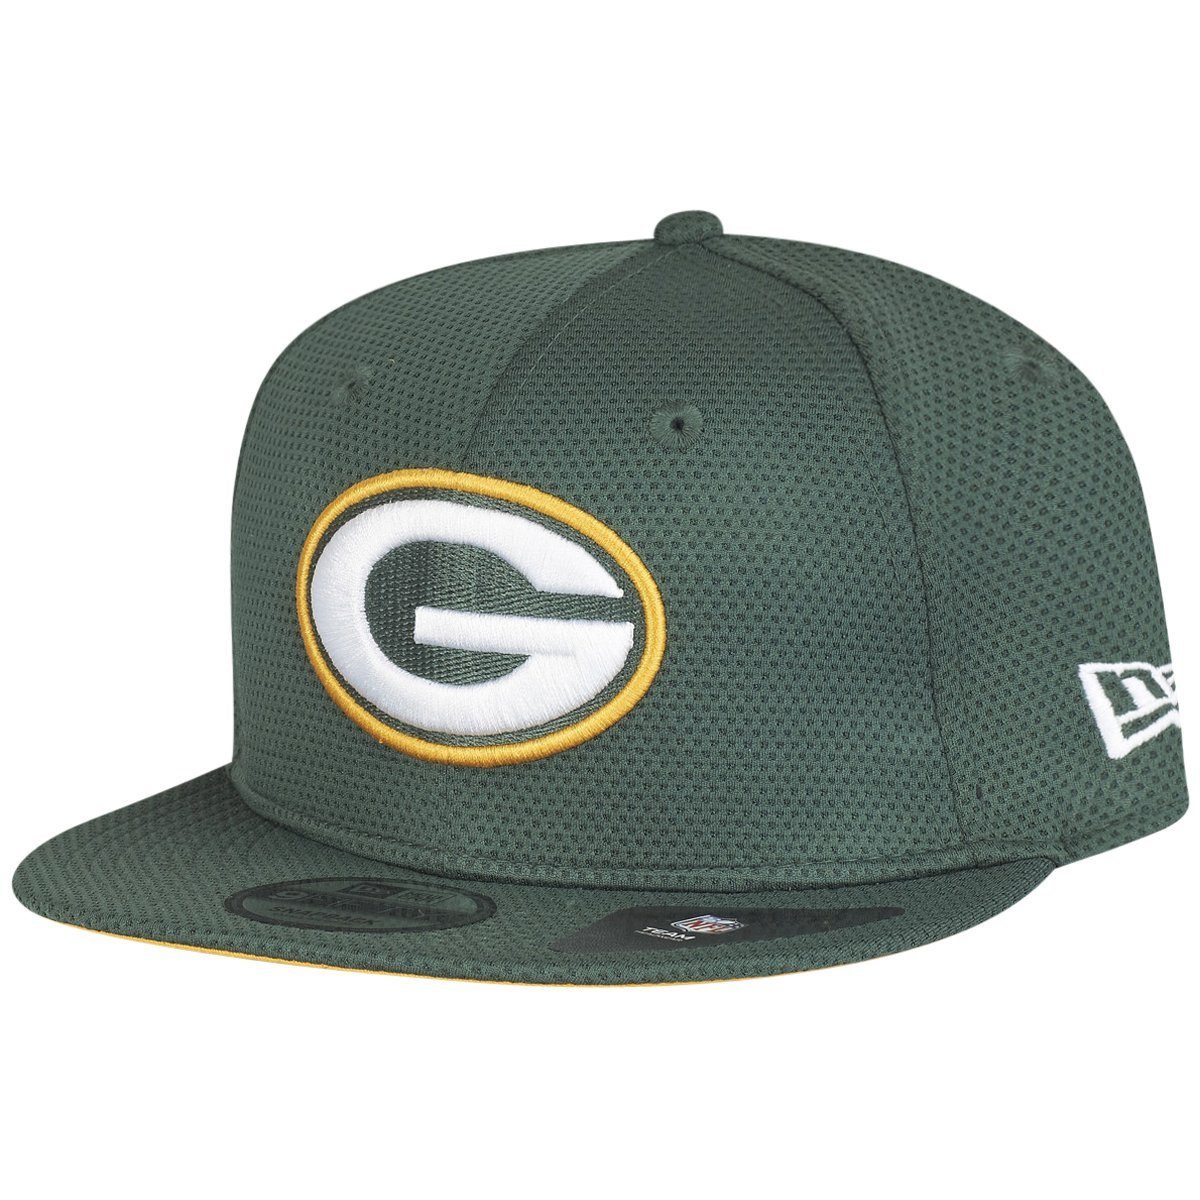 New Era Snapback Cap NFL TRANING Green Bay Packers